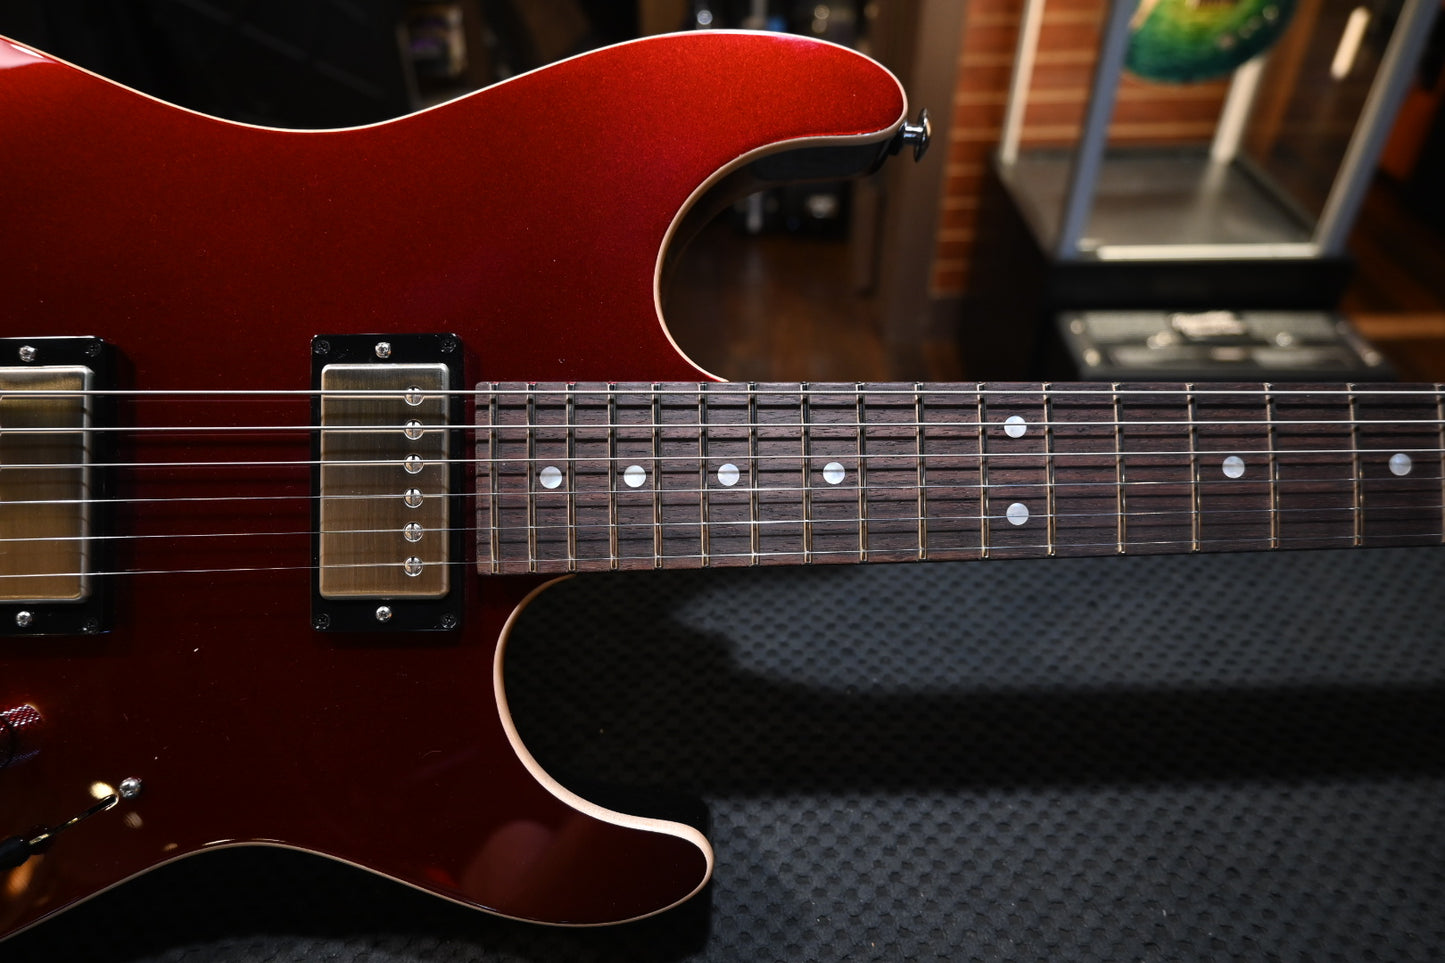 Suhr Pete Thorn Signature Series Standard HH - Garnet Red Guitar #6030 - Danville Music